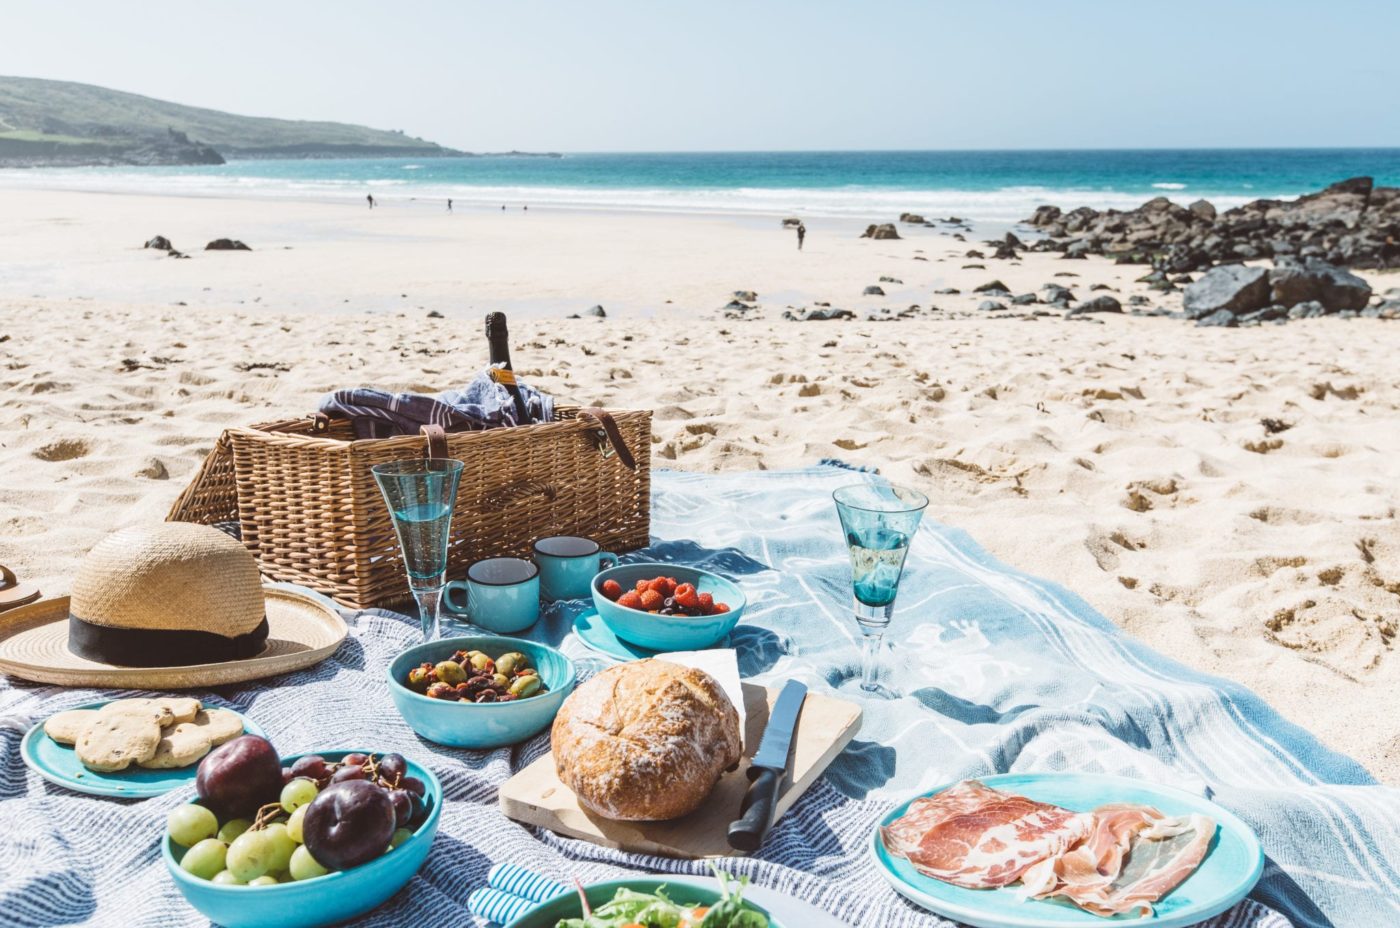 A picnic spread laid out on an empty sandy beach